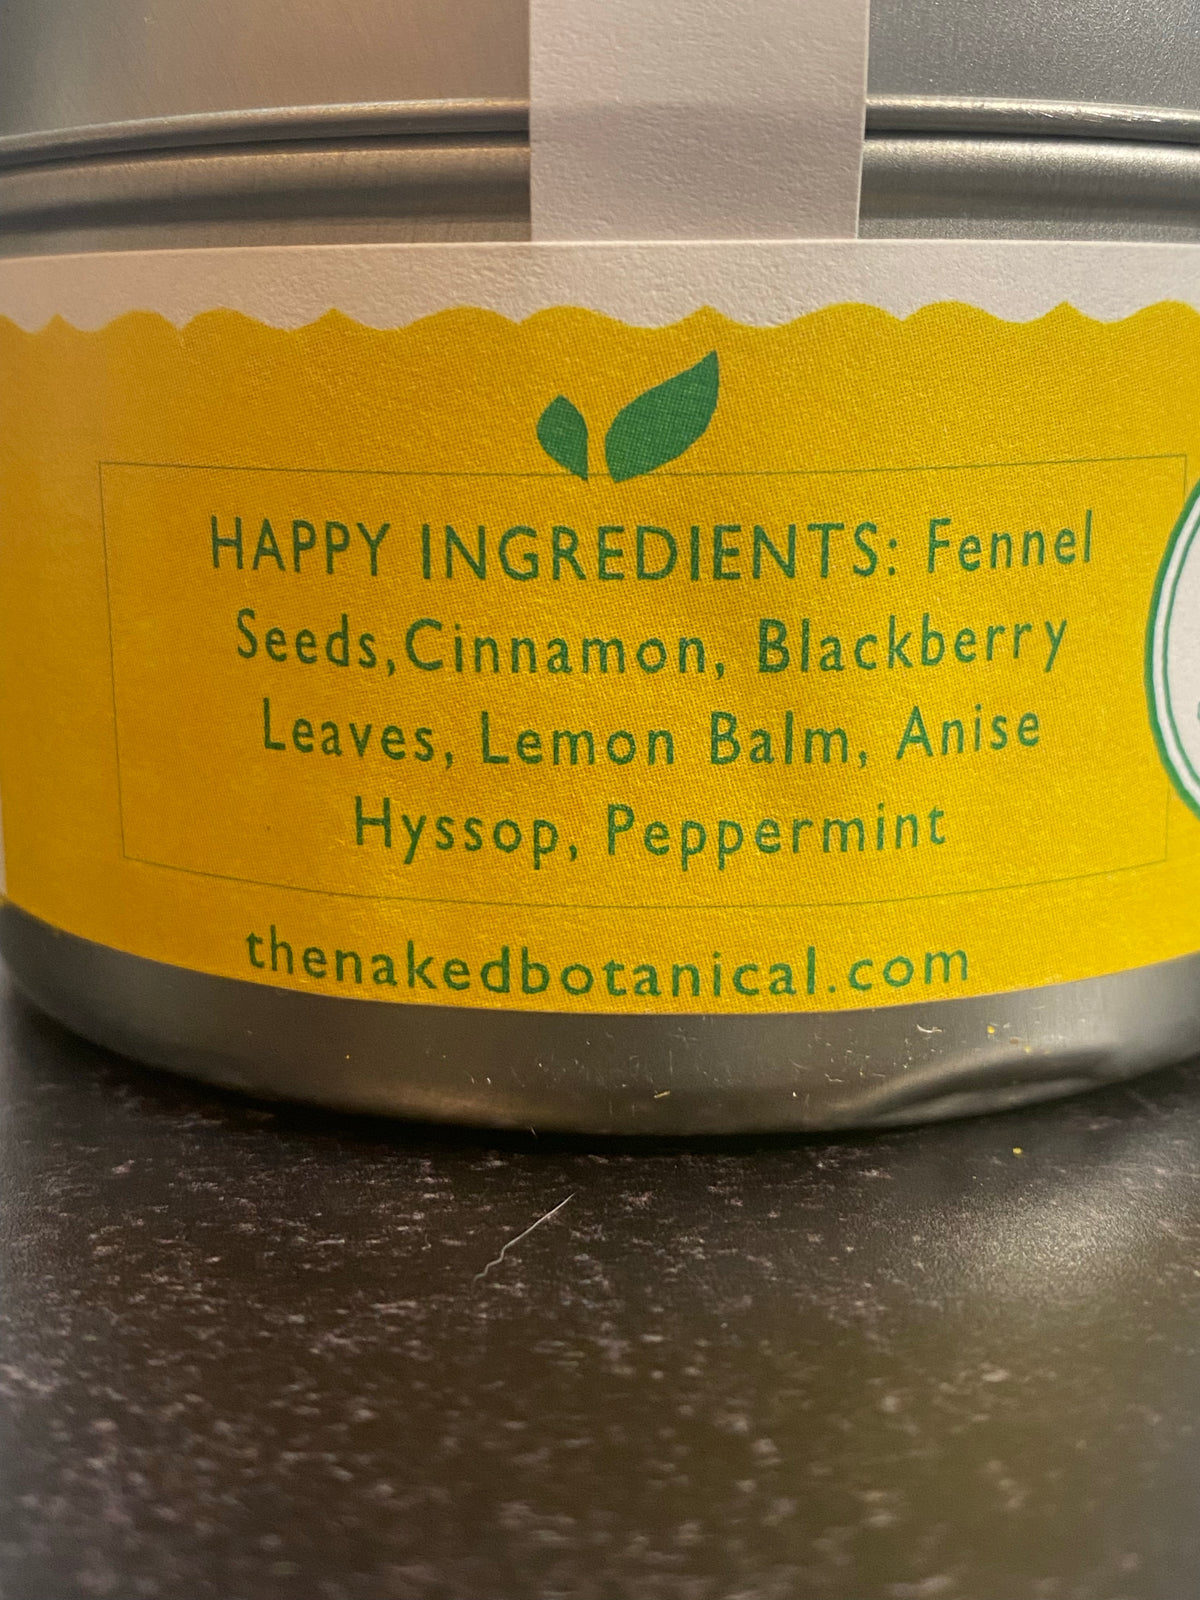 Happy Tummy Herbal Tea (5 bags)